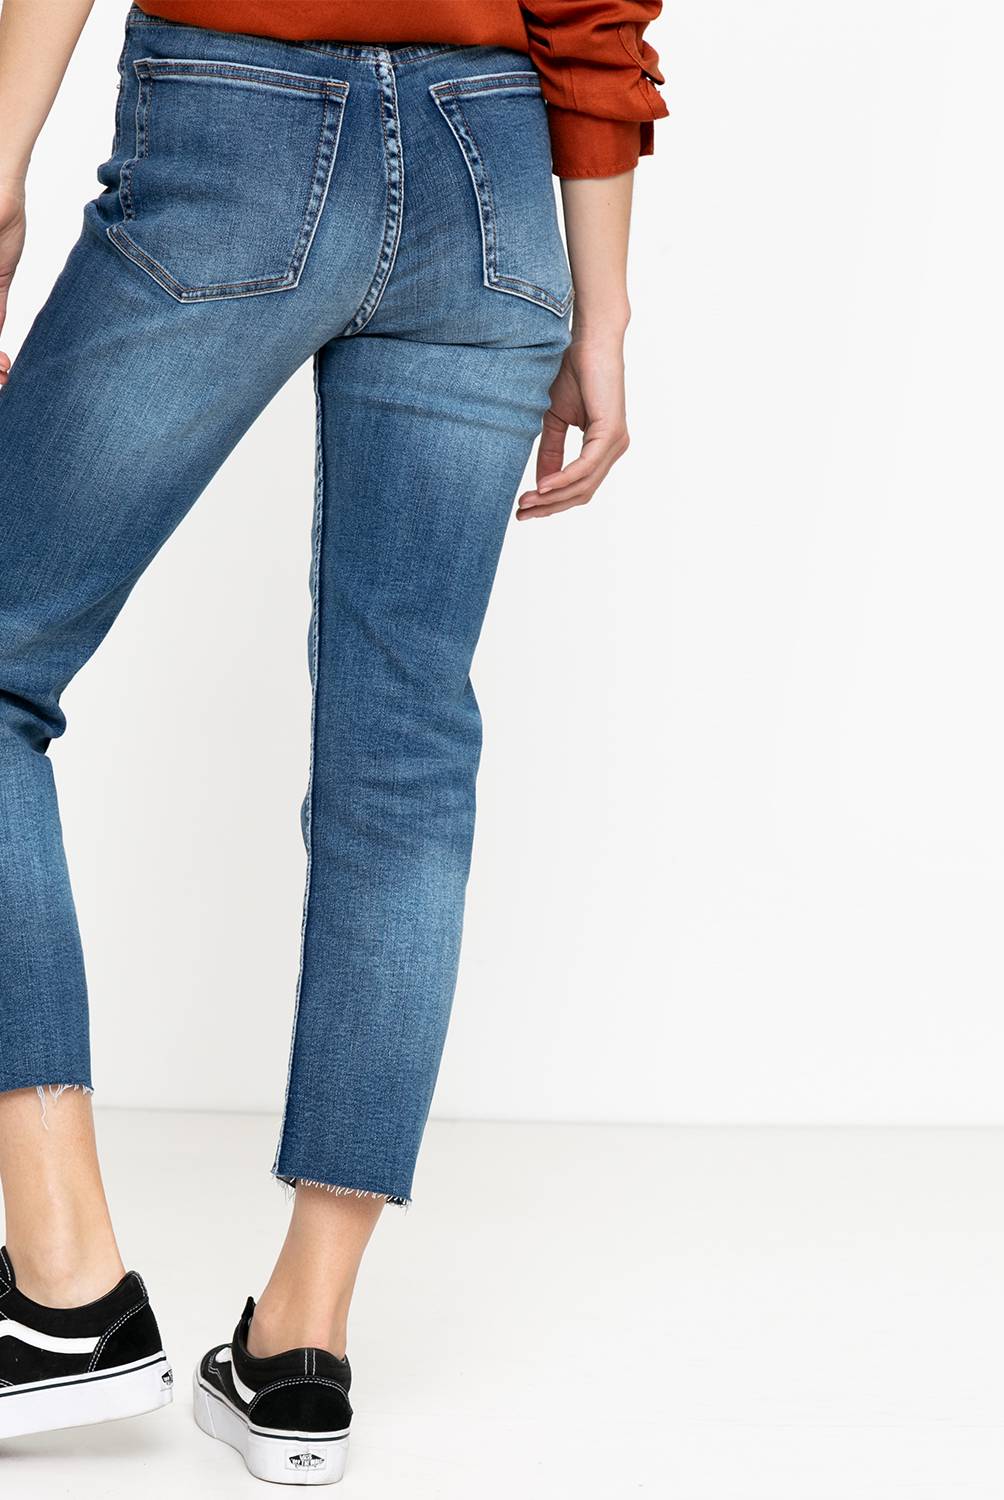 Americanino - Jeans Mujer